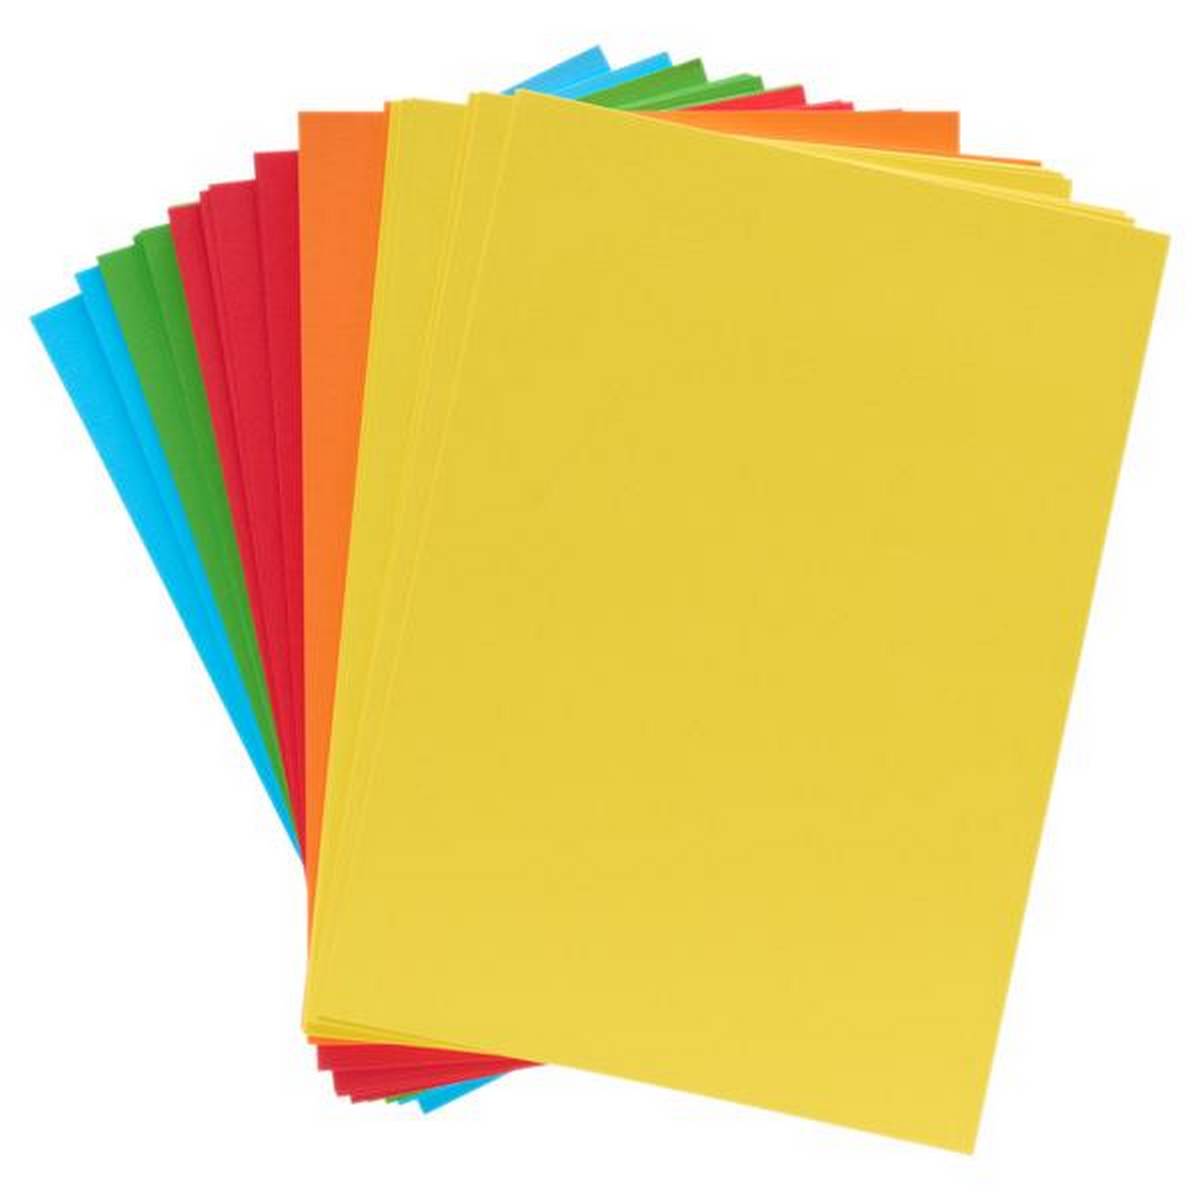 Premier Activity A4 160gsm Card 250 Sheets - Rainbow